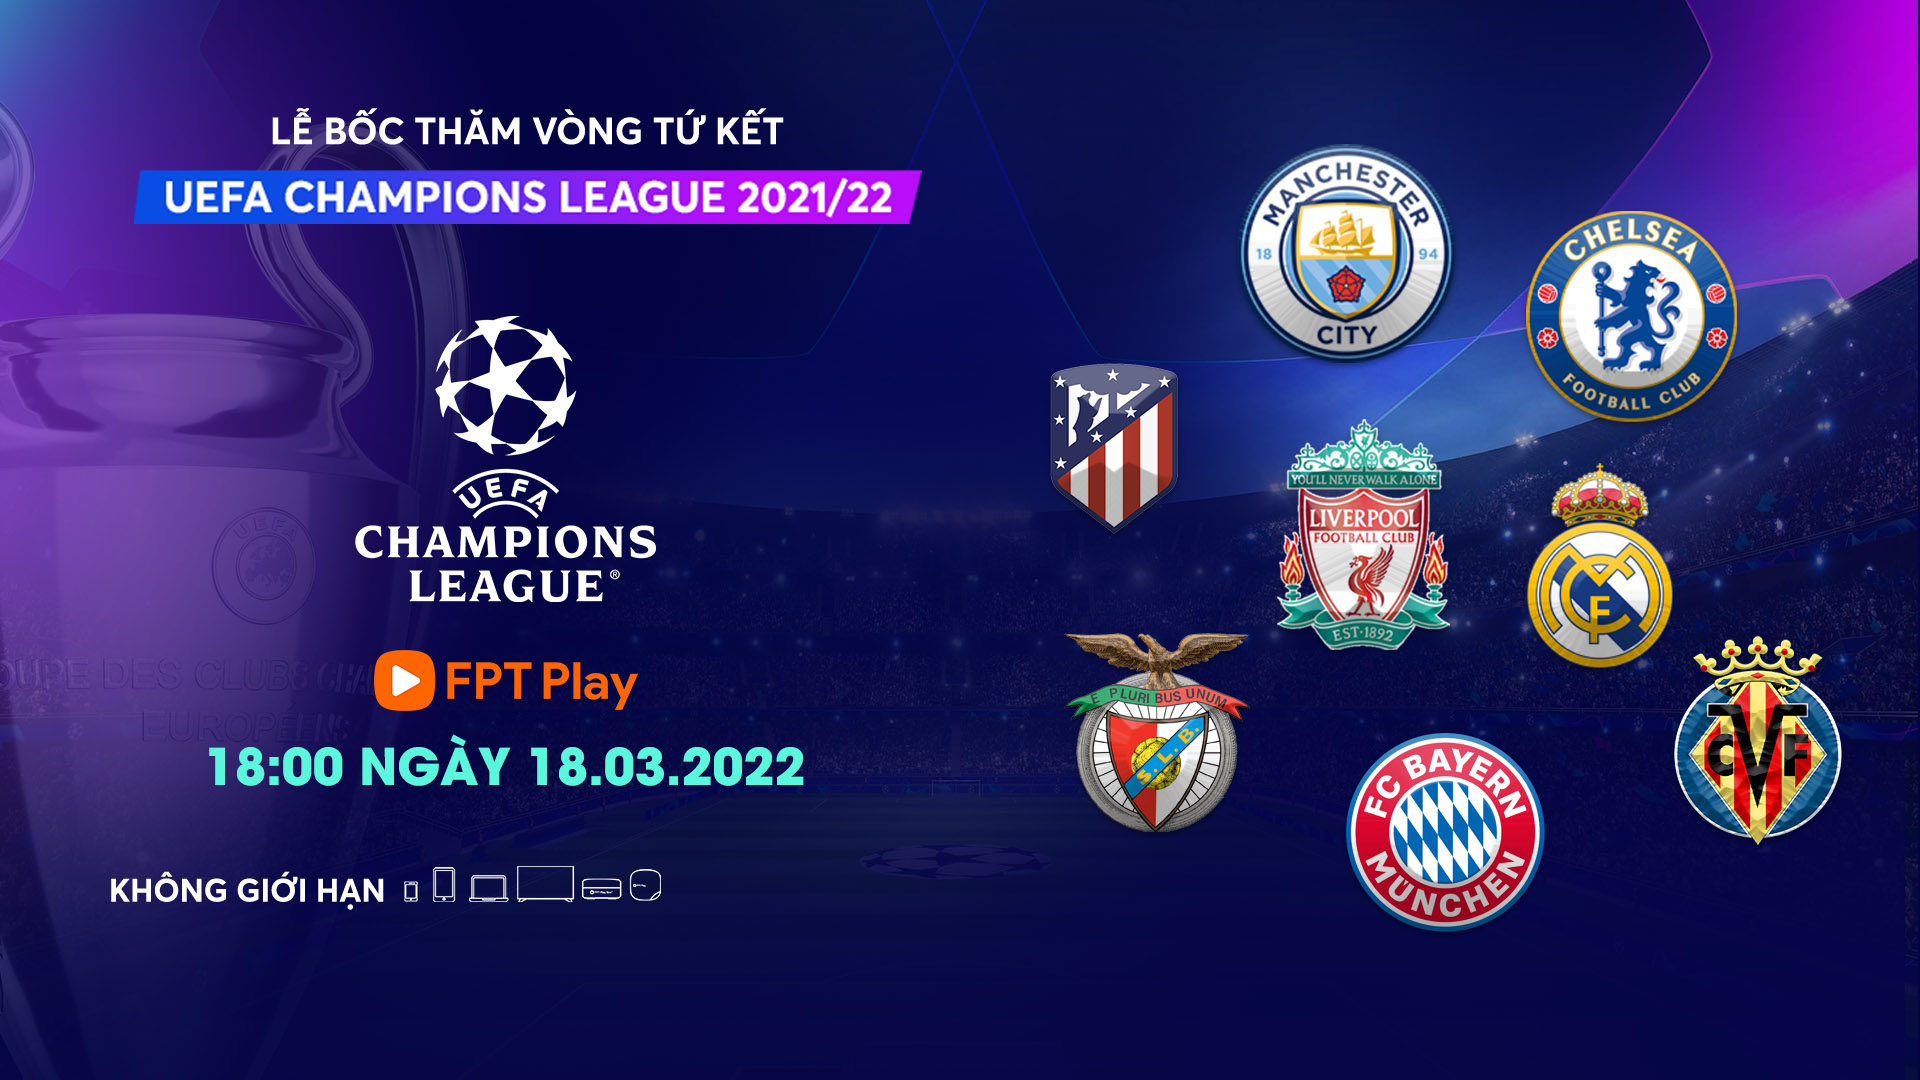 Bốc thăm tứ kết UEFA Champions League mùa giải 2021/2022 - UEFA Champions League